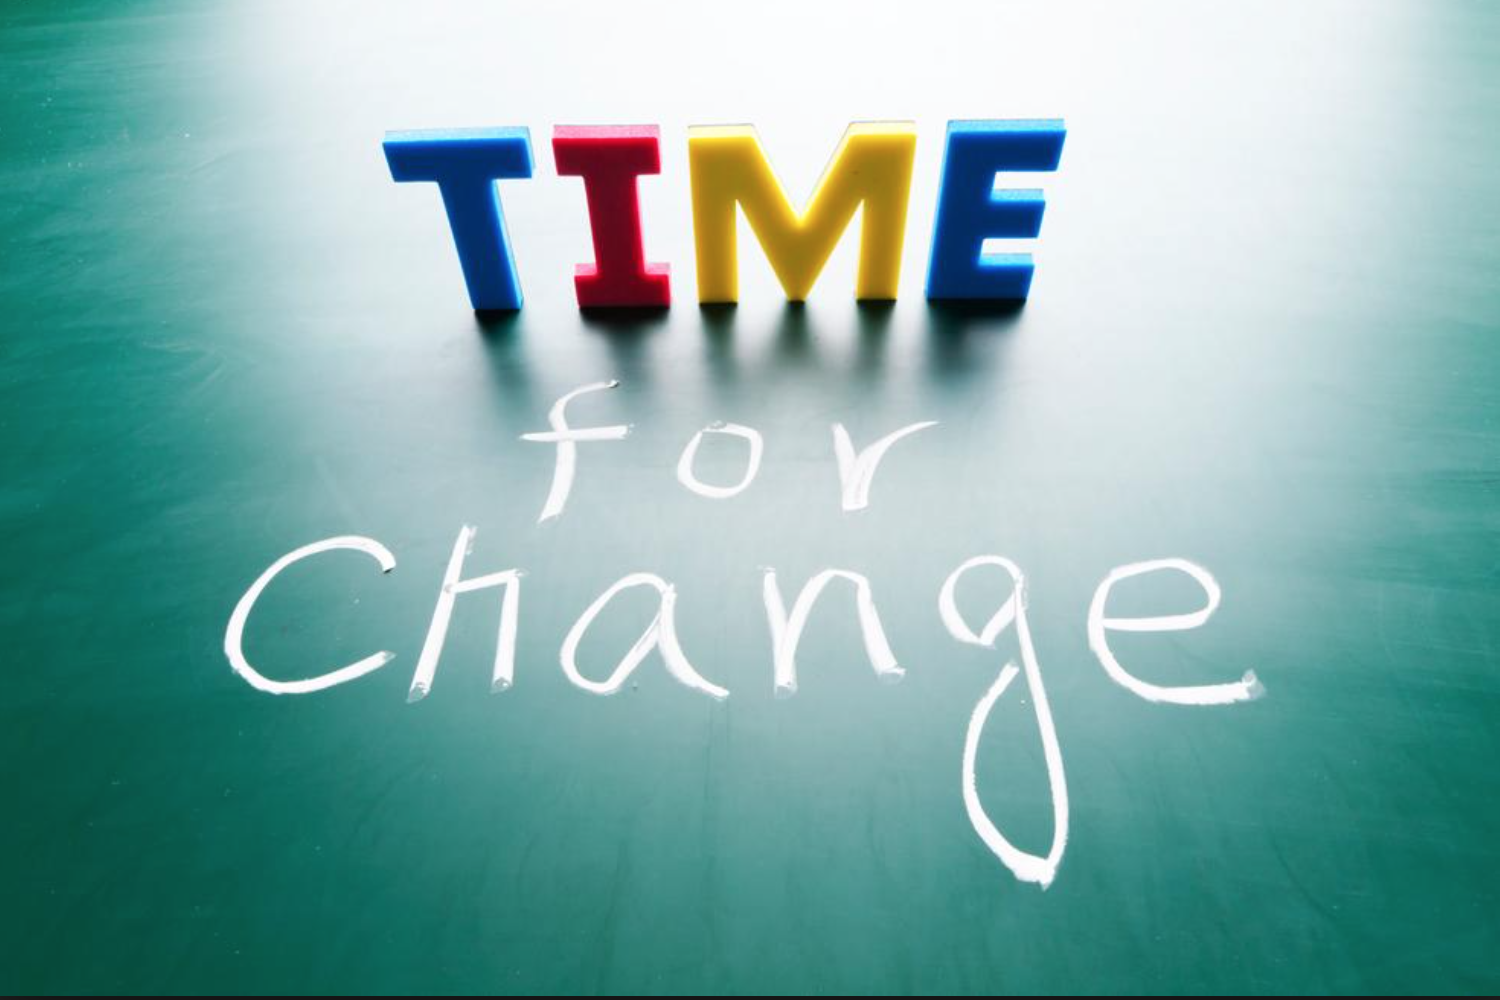 A life changing year. Картинки changed. Time for change. Change картинка для презентации. New Life картинки.